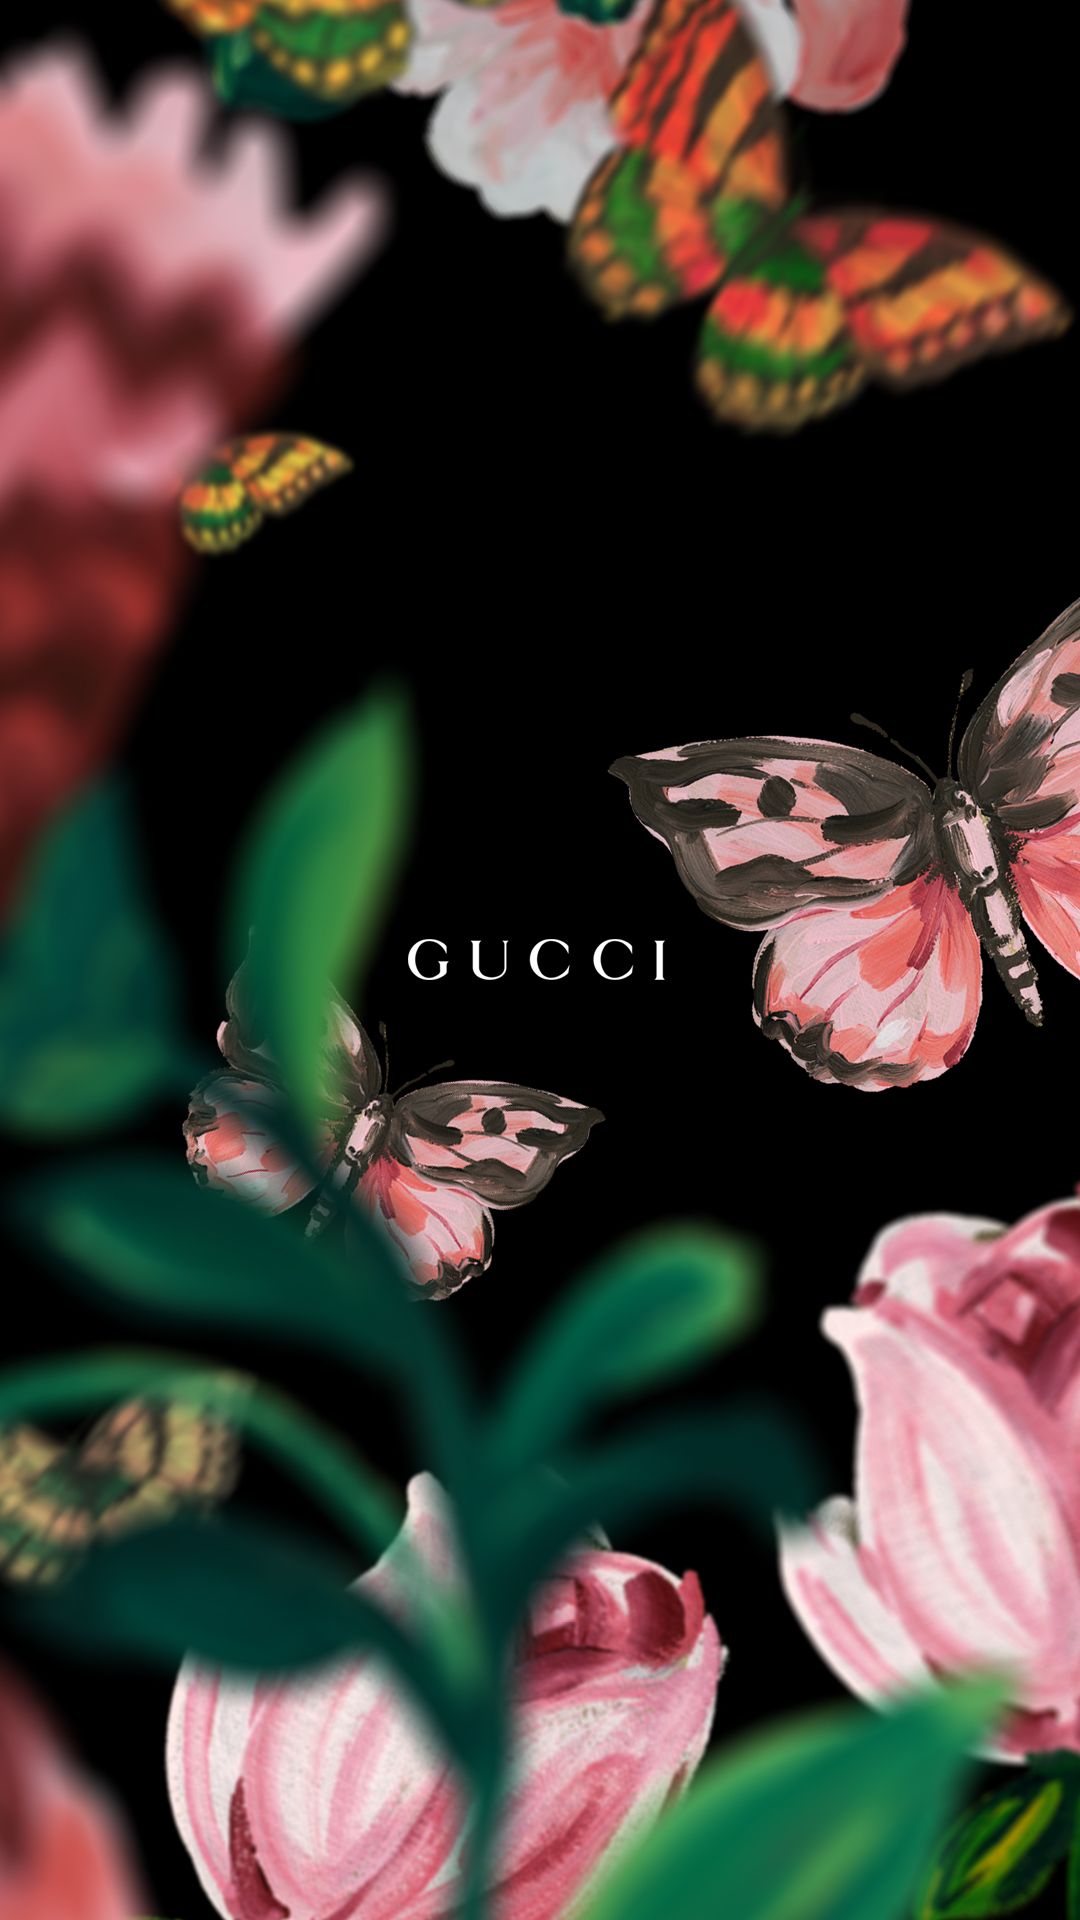 Gucci Girl wallpaper by Sneks99 - Download on ZEDGE™